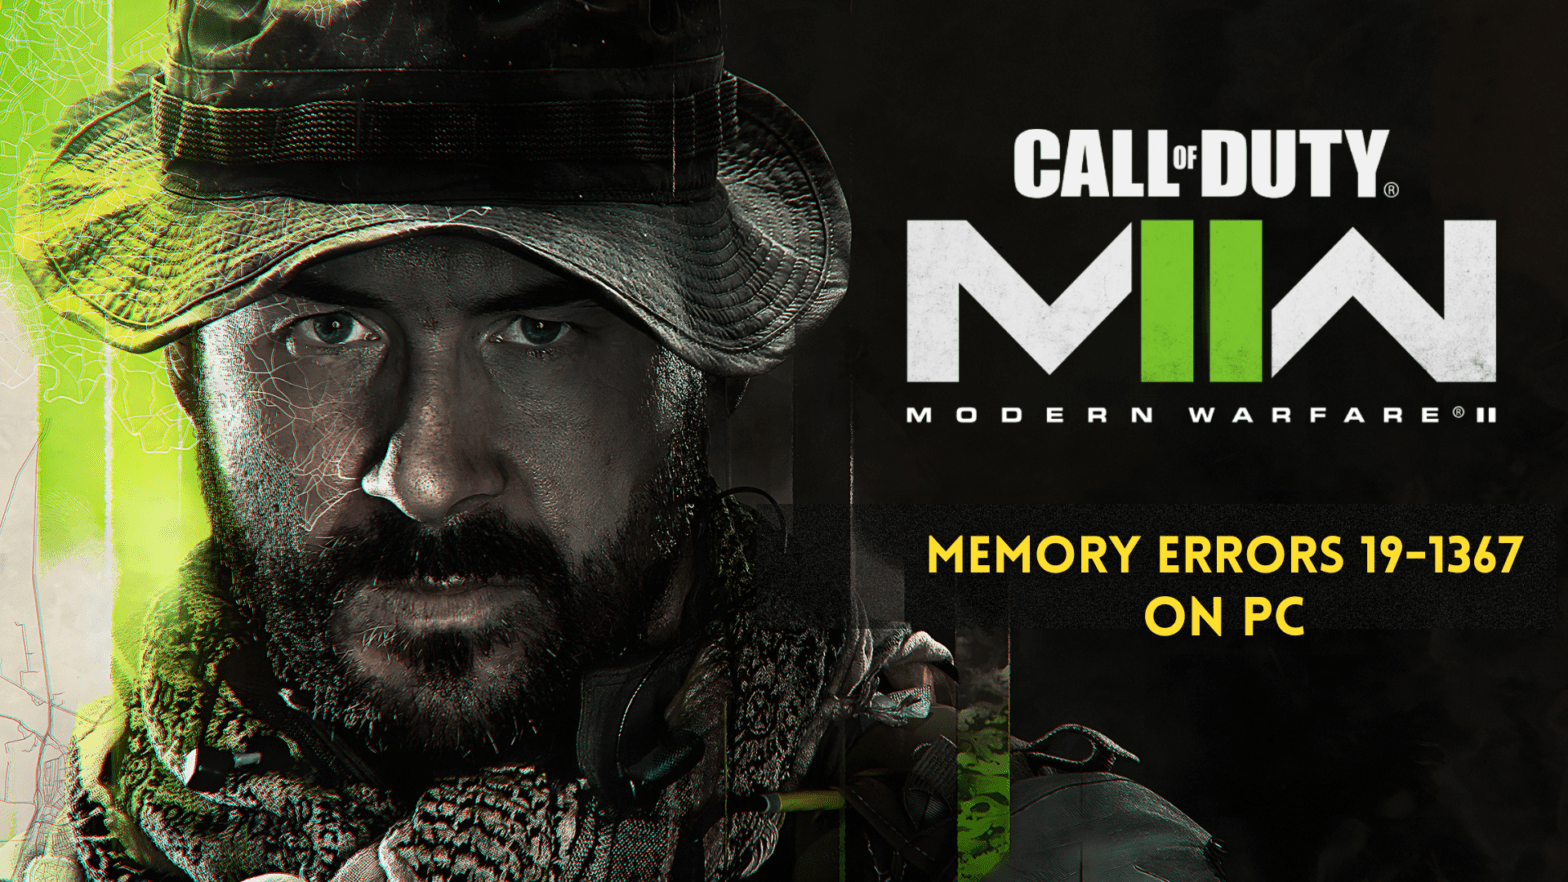 Call of Duty Modern Warfare 2 Memory Error 19-1367 [9 Fixes]